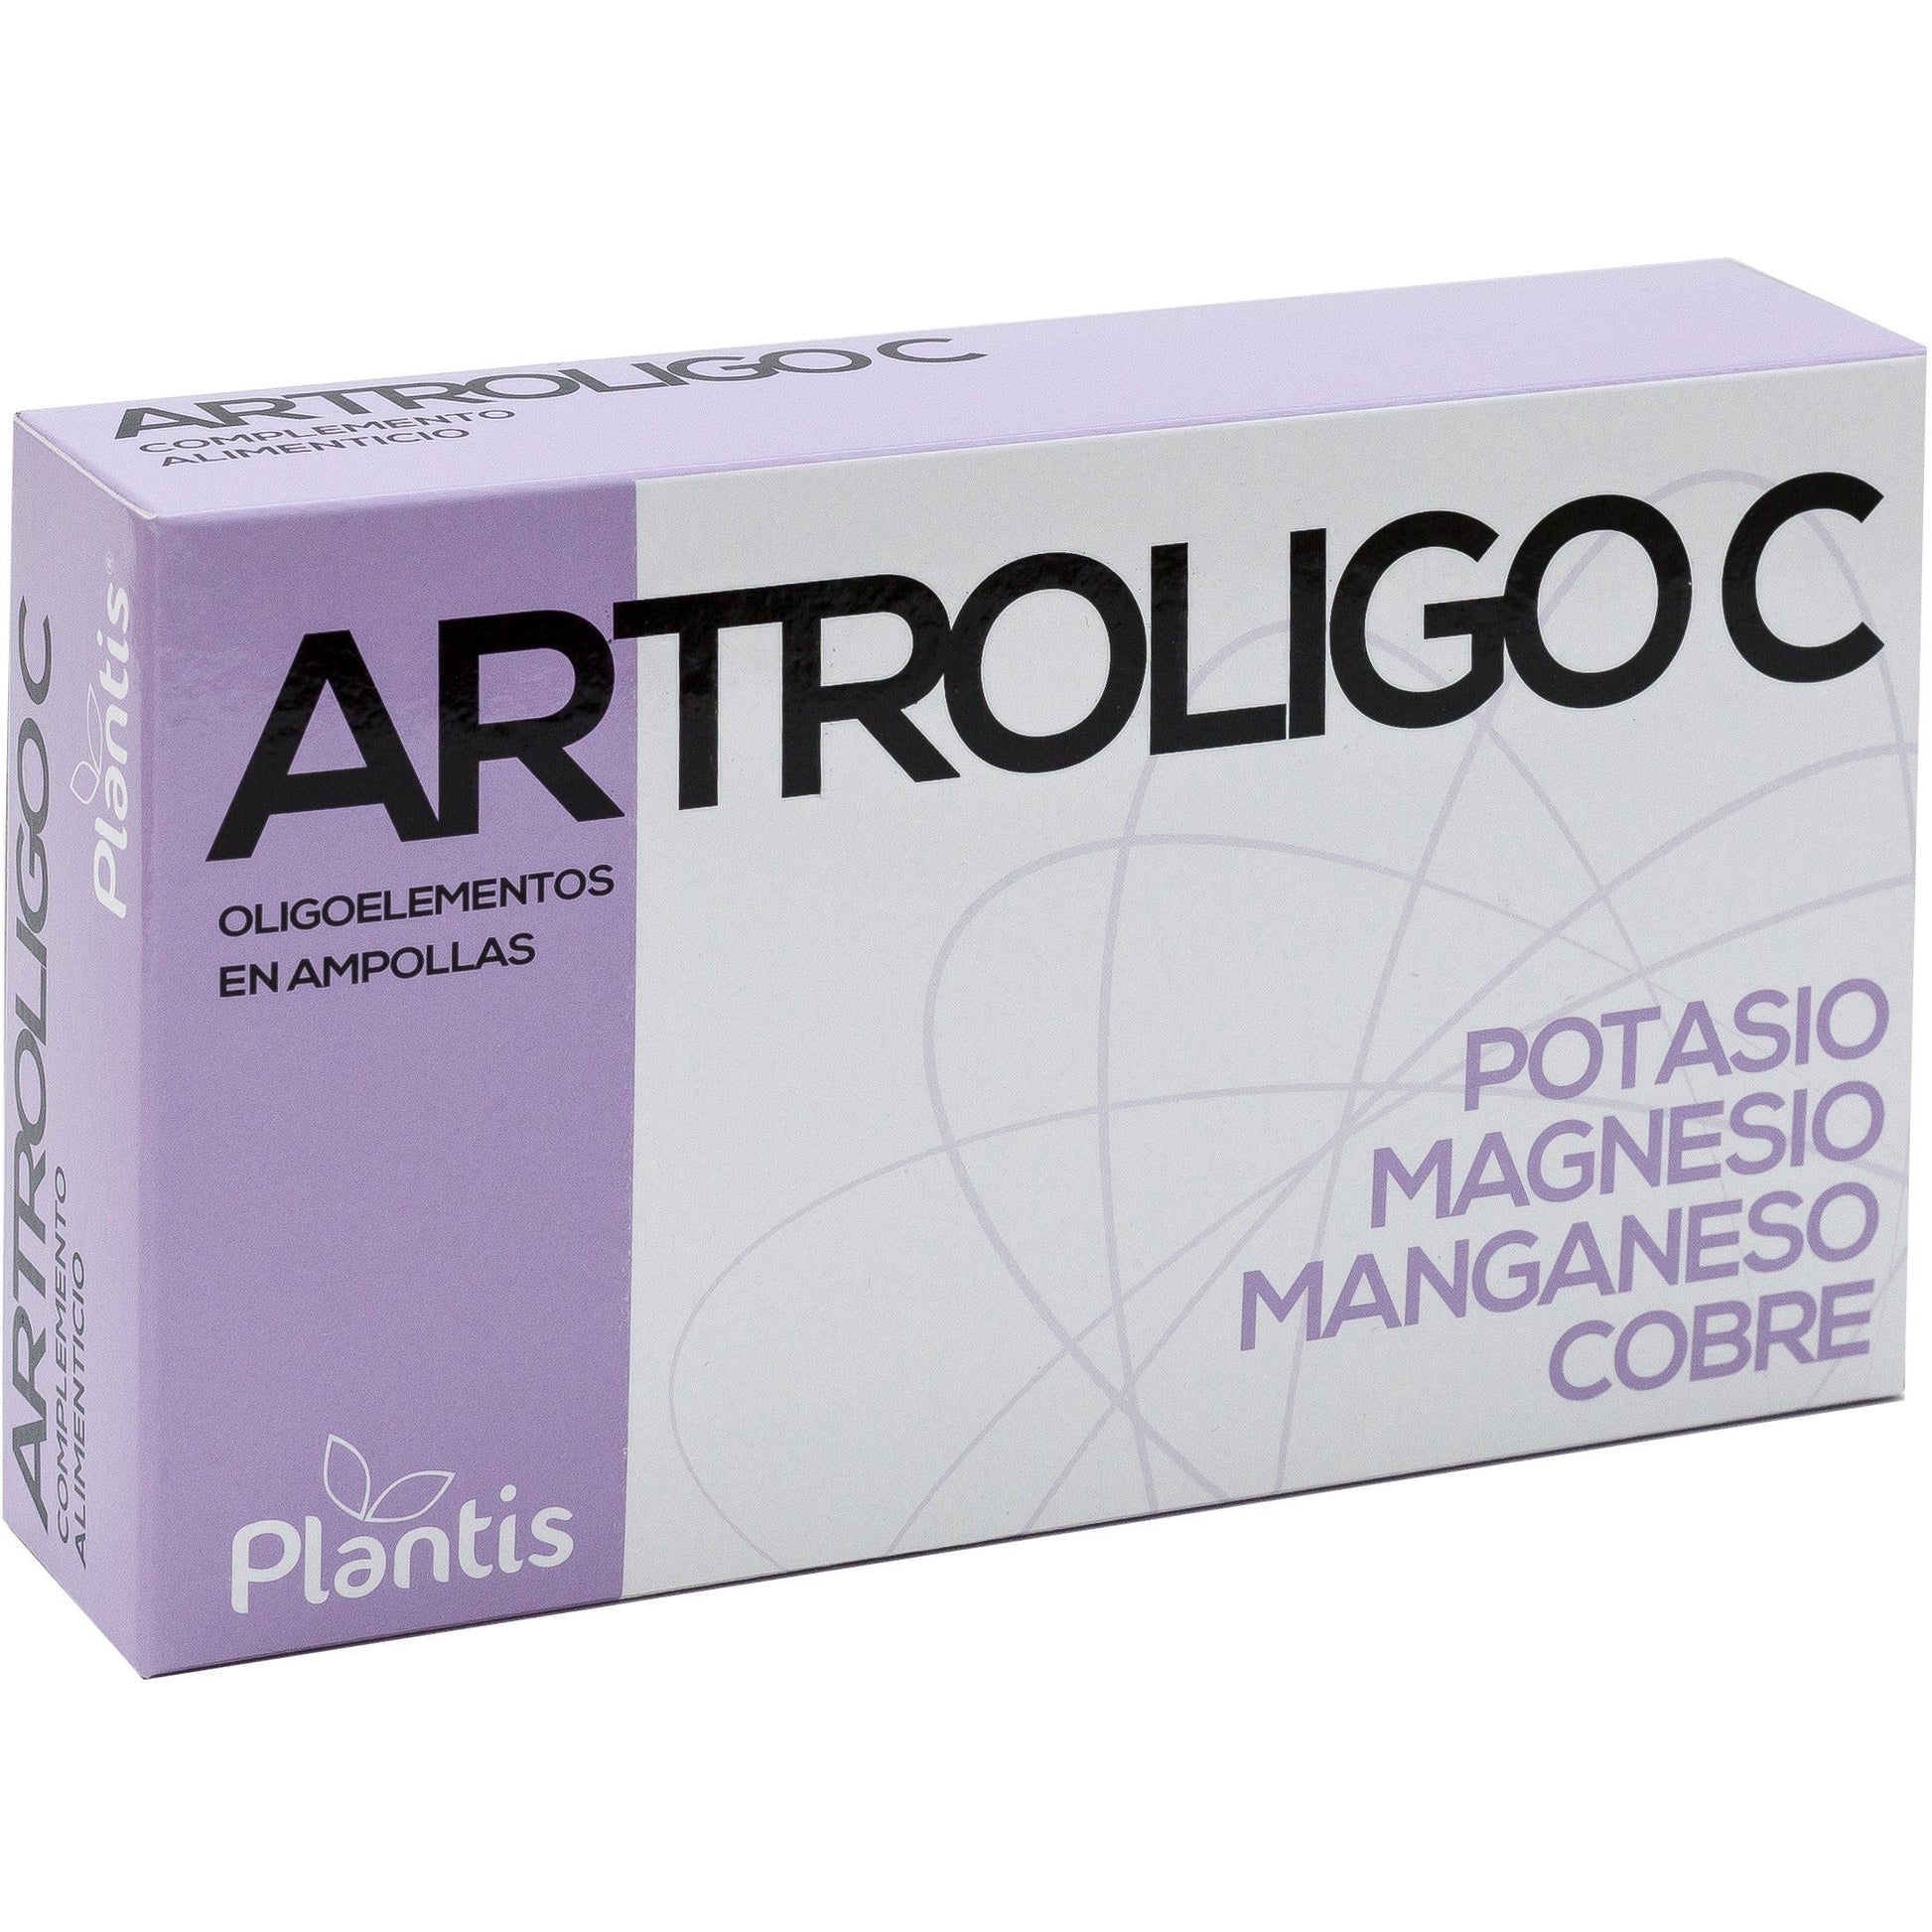 Artroligo-C 20 ampollas | Artesania Agricola - Dietetica Ferrer